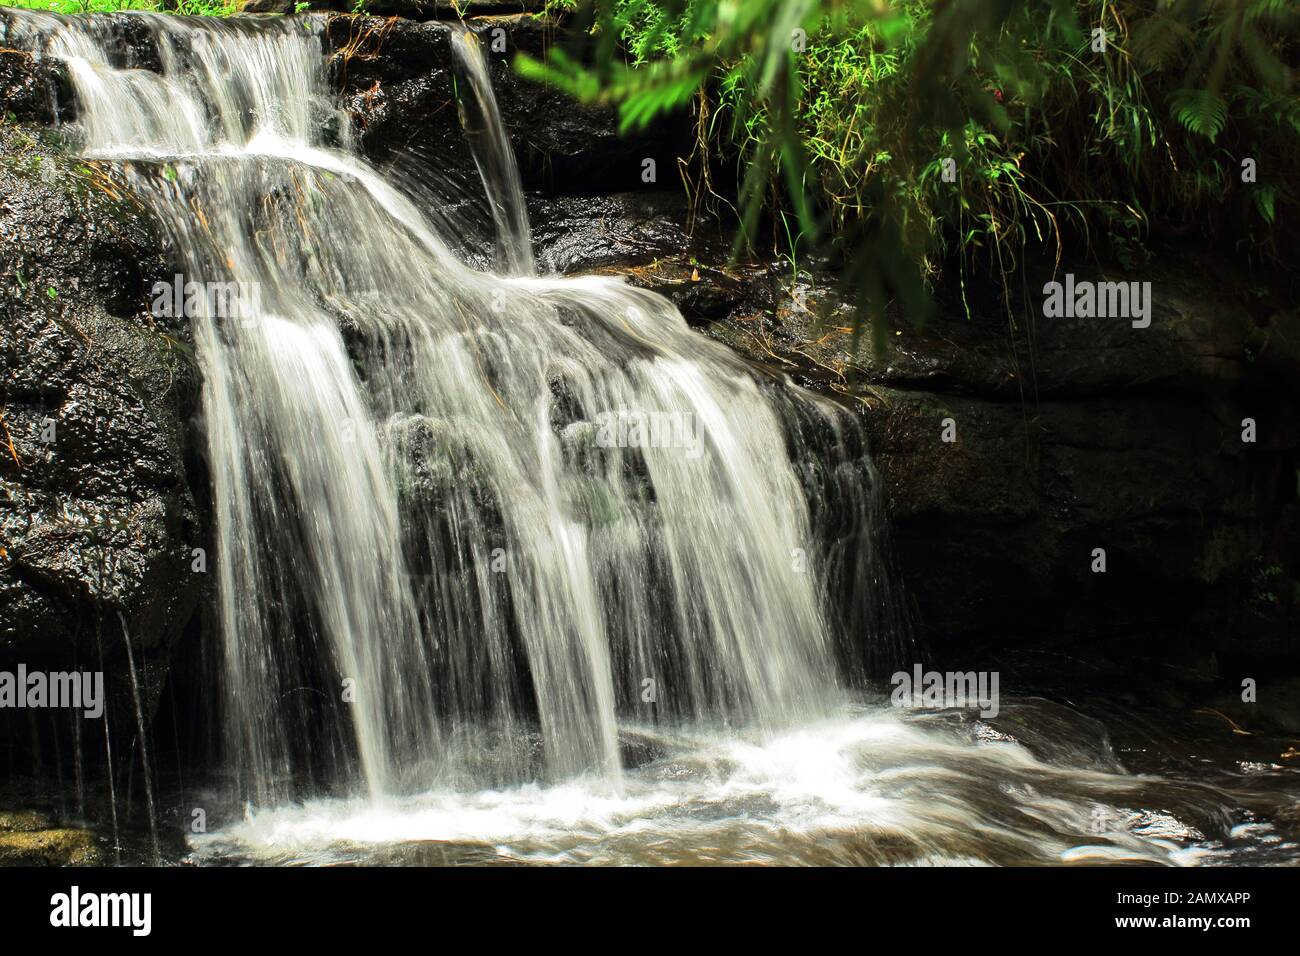 beautiful vattakanal waterfalls on levinge stream at kodaikanal, tamilnadu in india Stock Photo